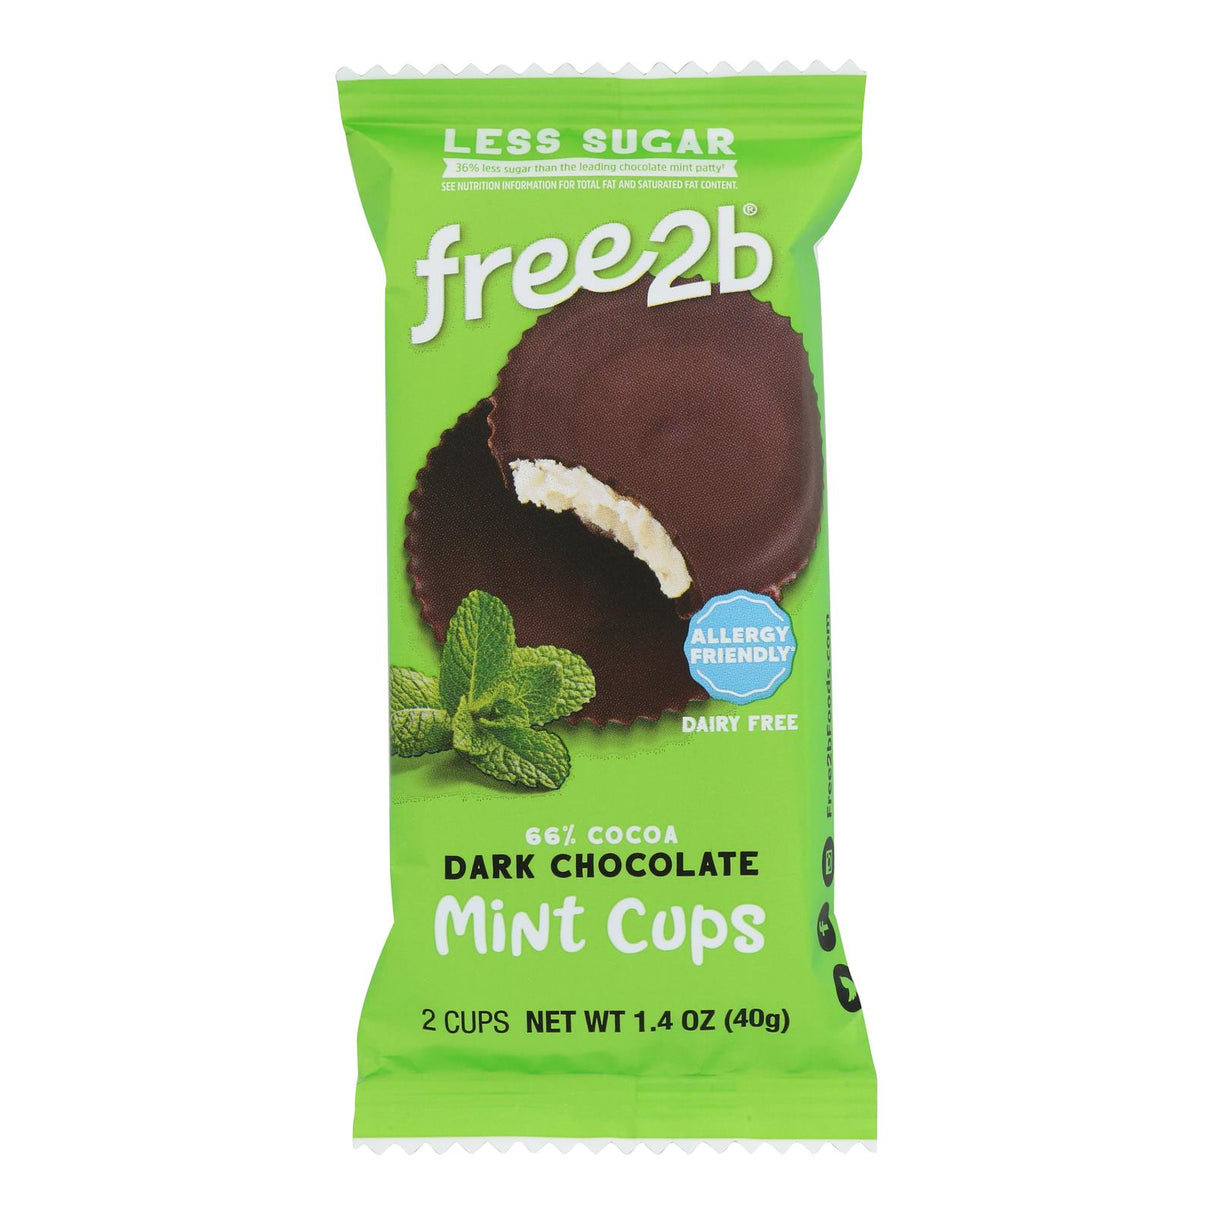 Free 2 B Mint Cups Dark Chocolate, 2-Cup - Case of 12 - 1.4 Oz - Cozy Farm 